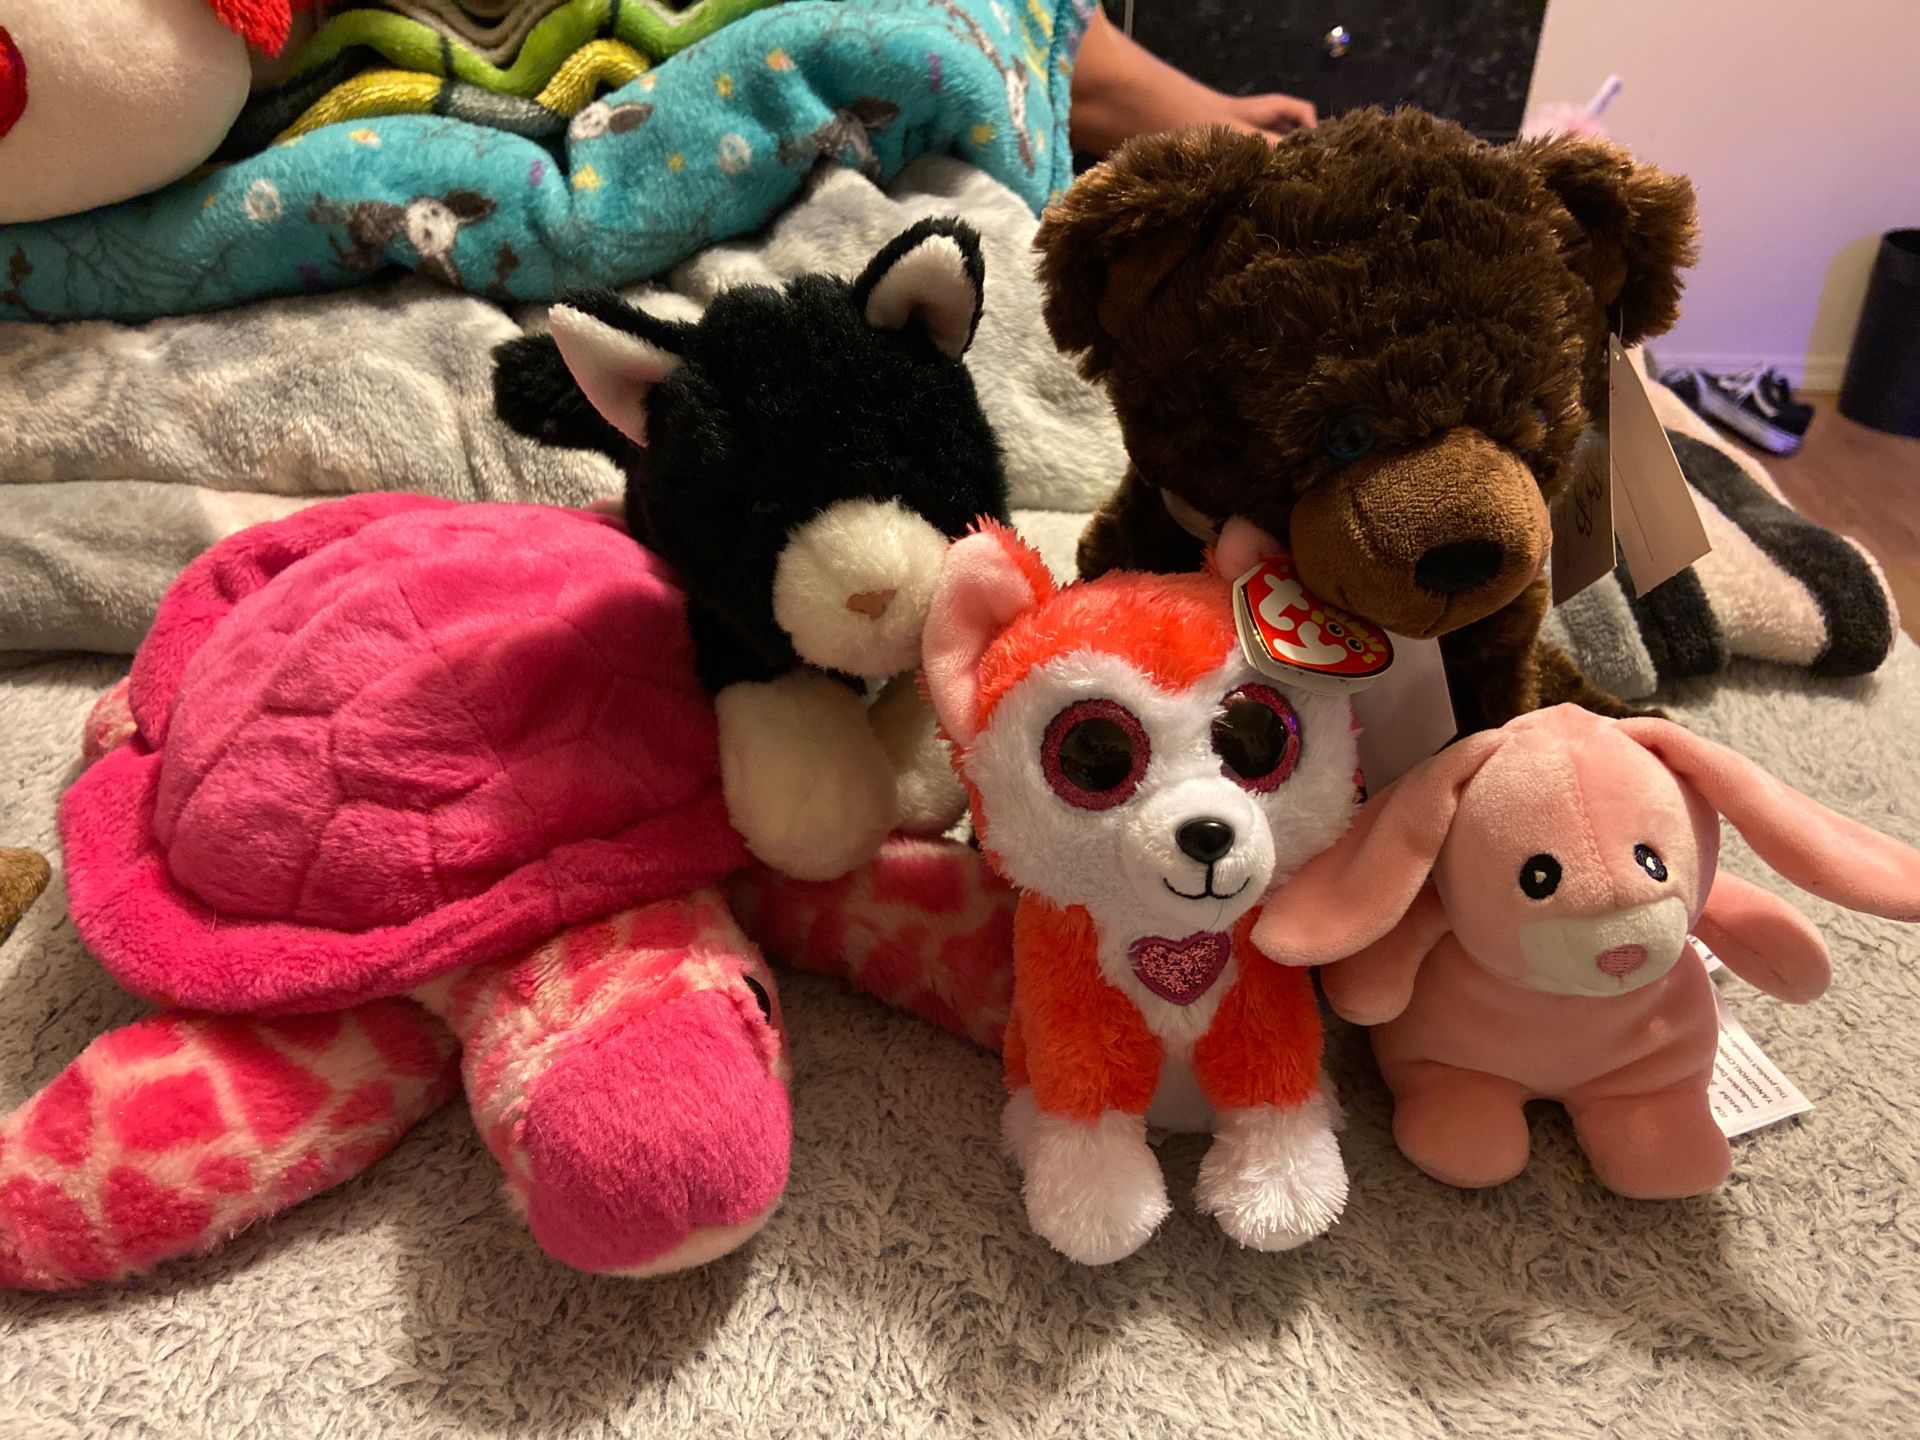 Random stuffed animals!